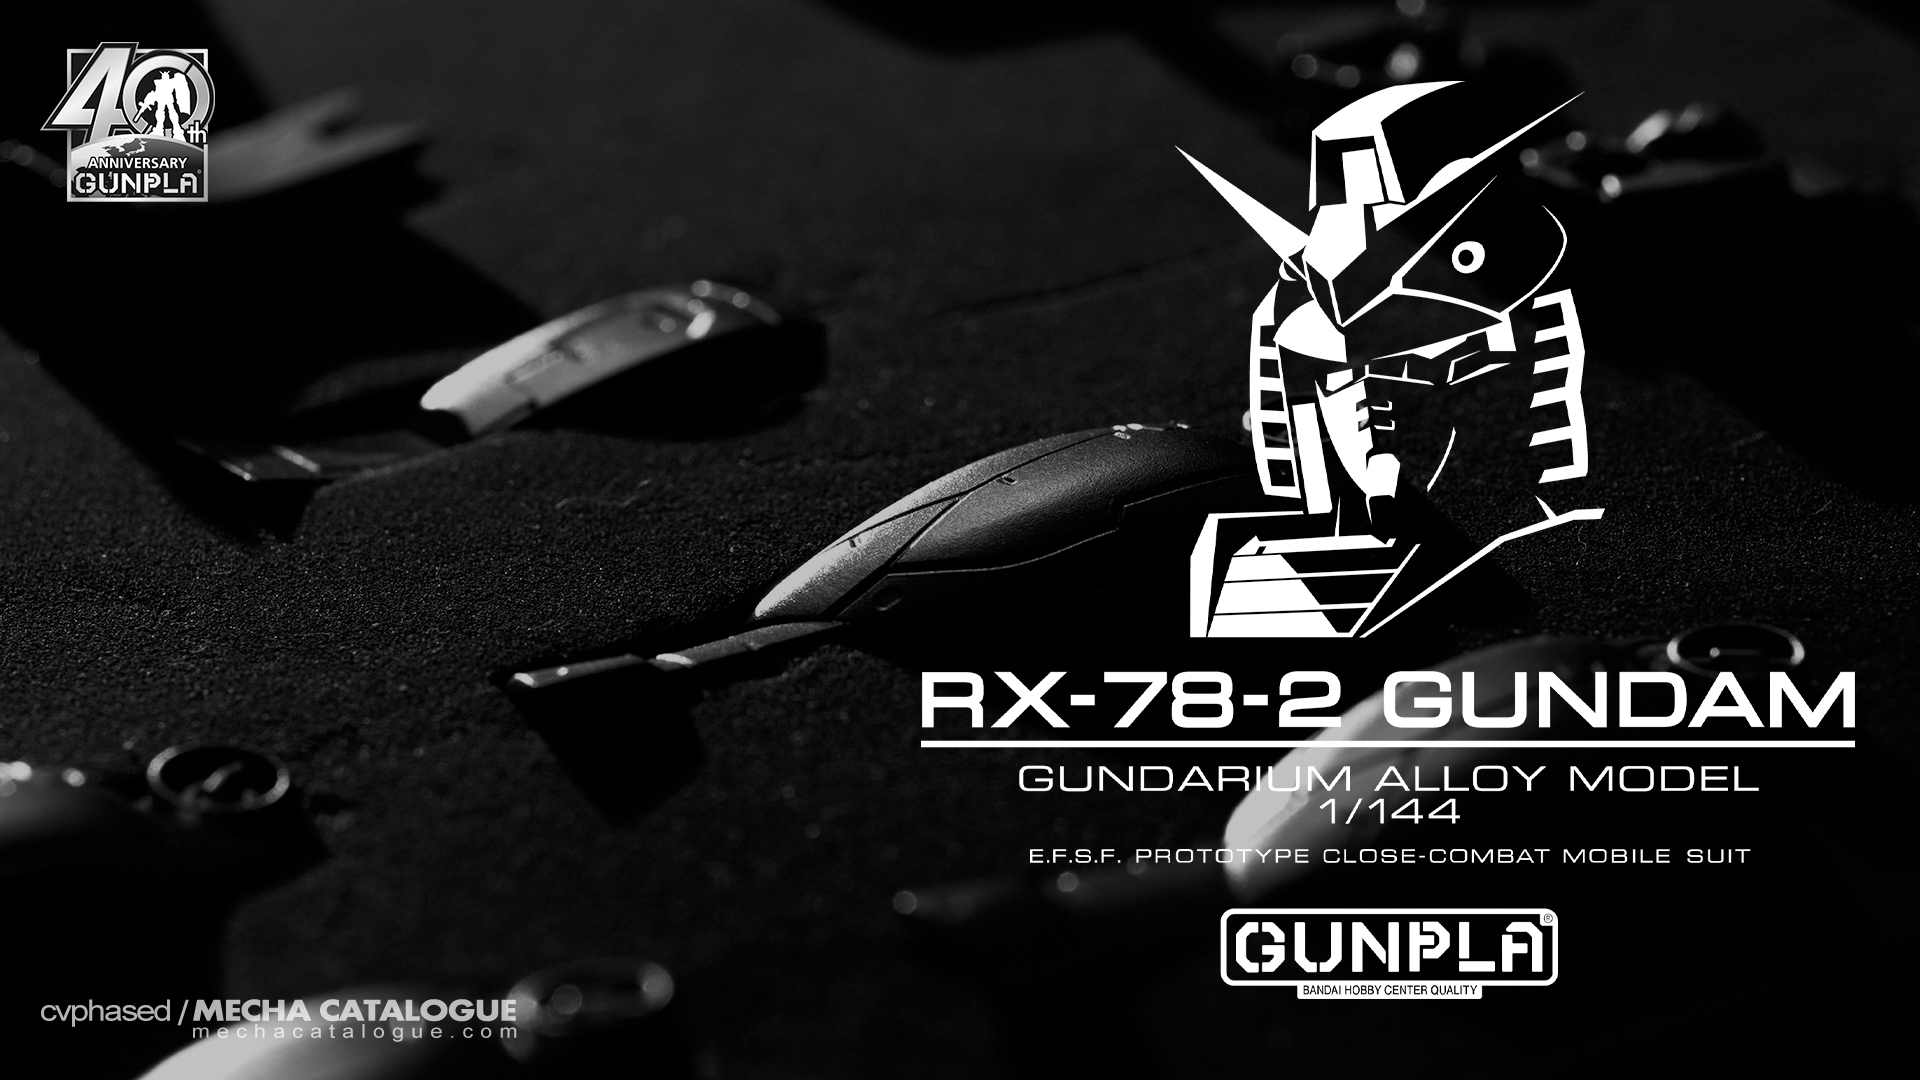 That's 220,000 JPY Expensive! Gundarium Alloy Model RX-78-2 Gundam